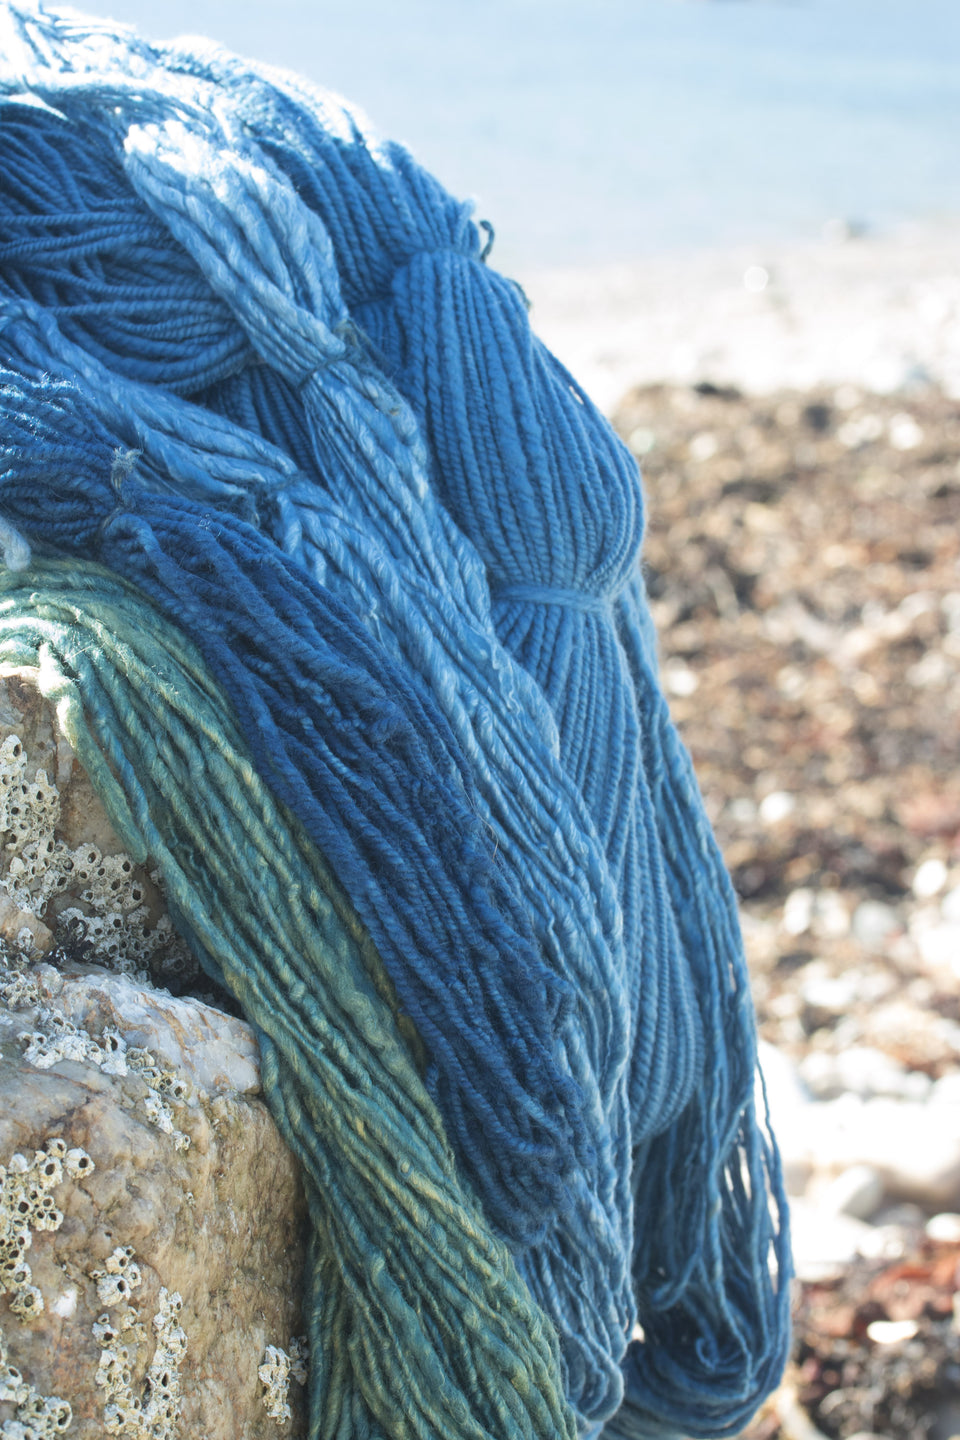 several handspun hanks of yarn on the shore in hoswick, shetland